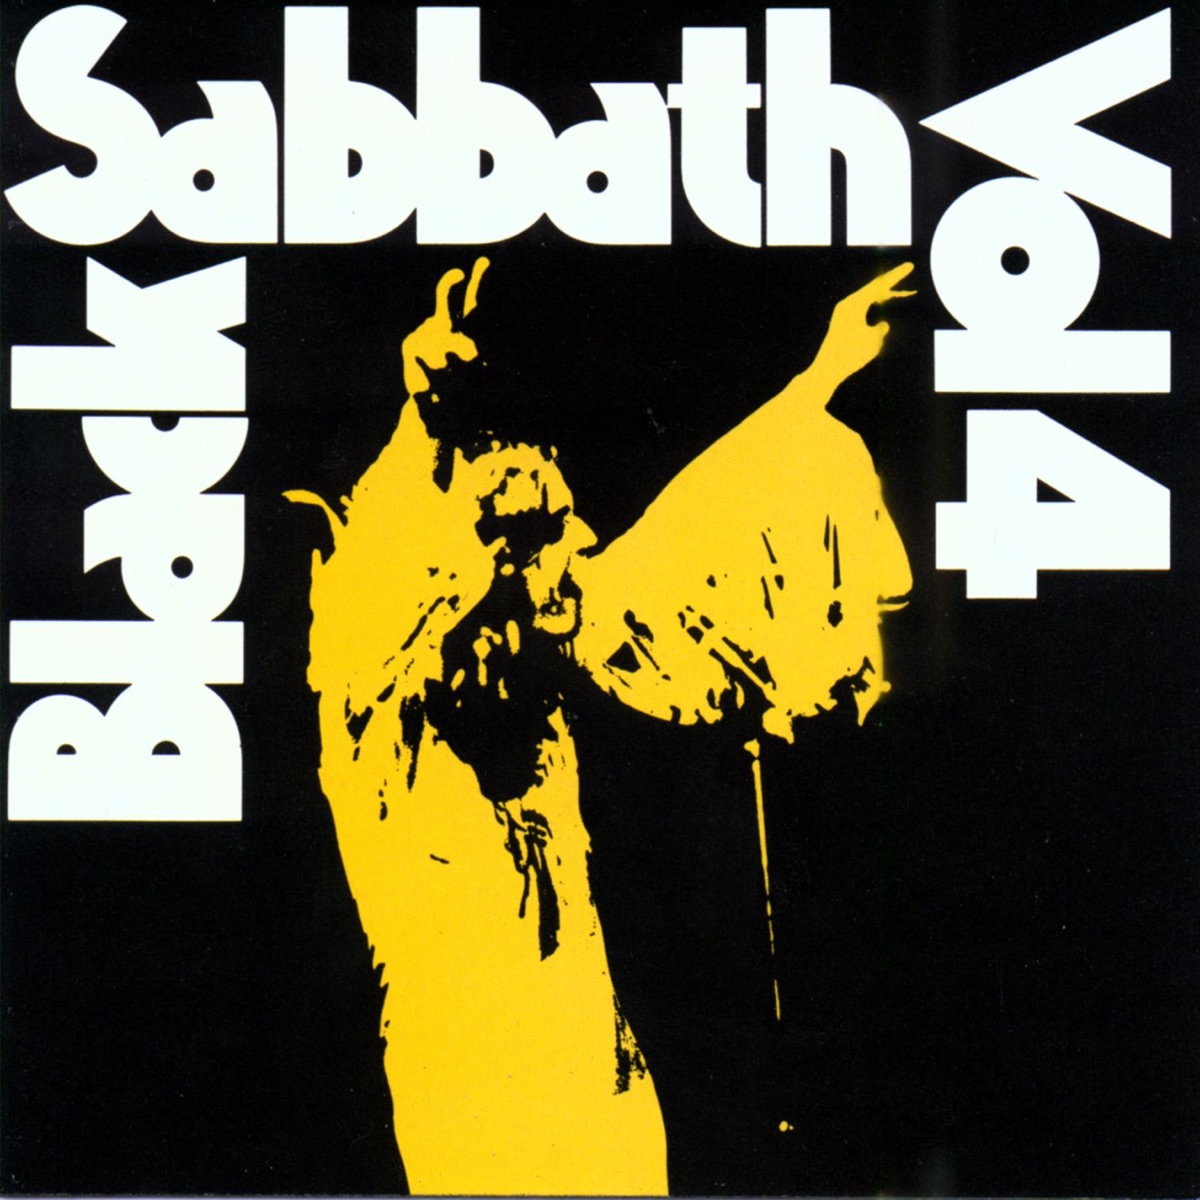 Black Sabbath, Vol. 4 - Album by Black Sabbath - Apple Music